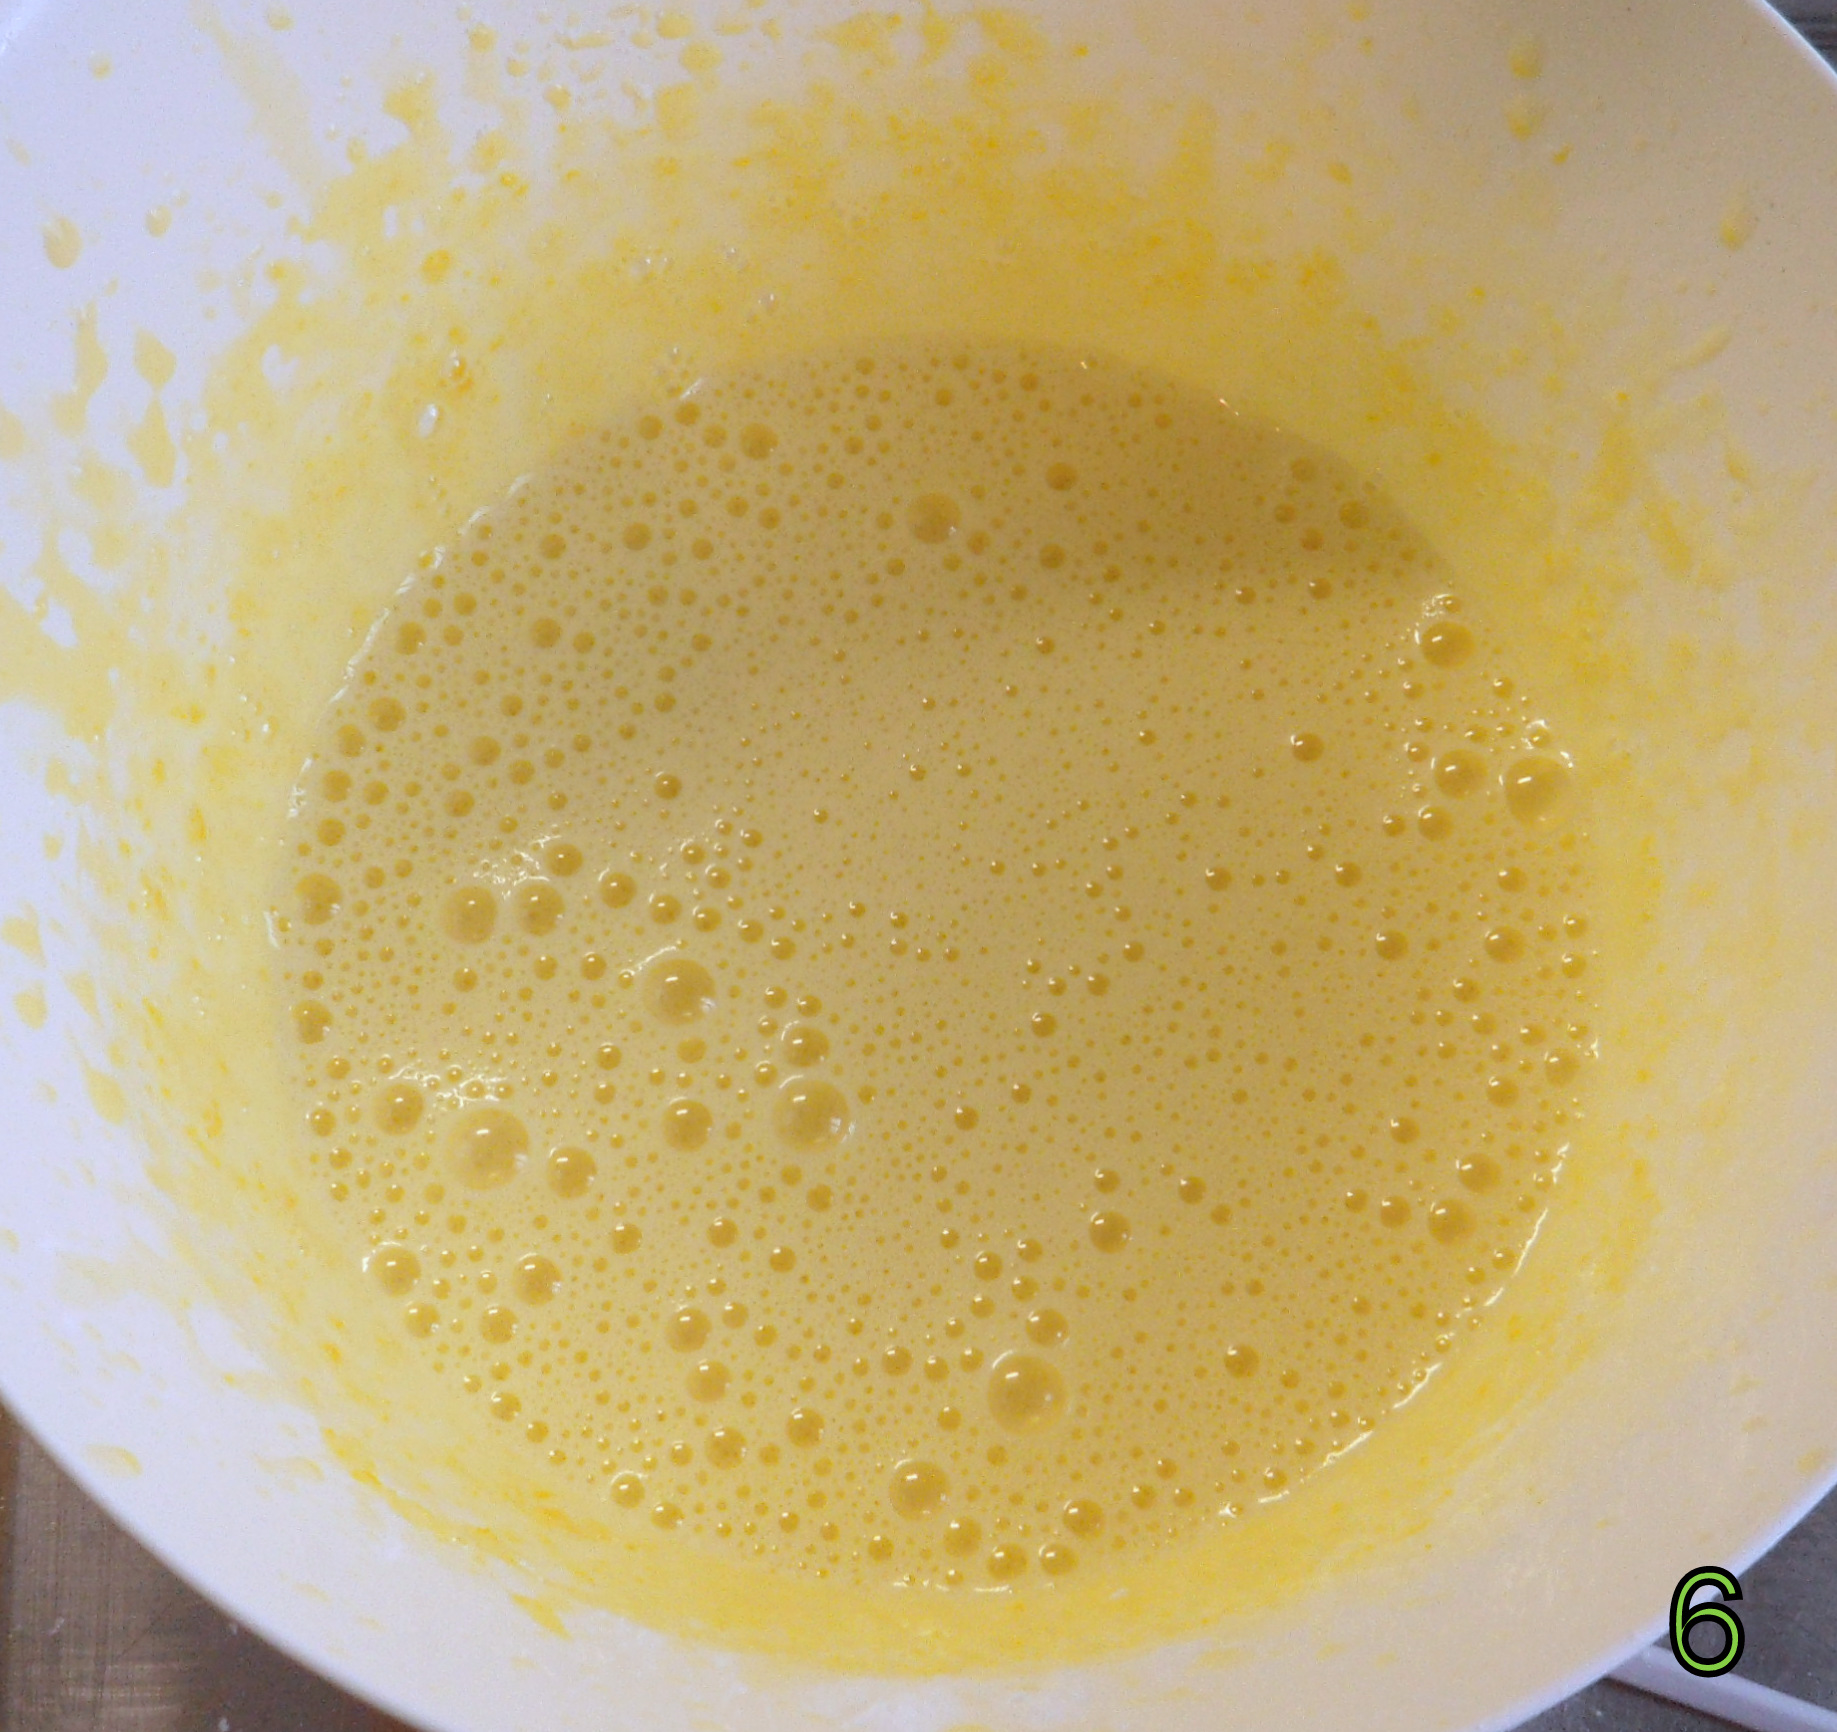 combine the sifted cornstarch with the eggs to prepare the gluten-free pastry cream.